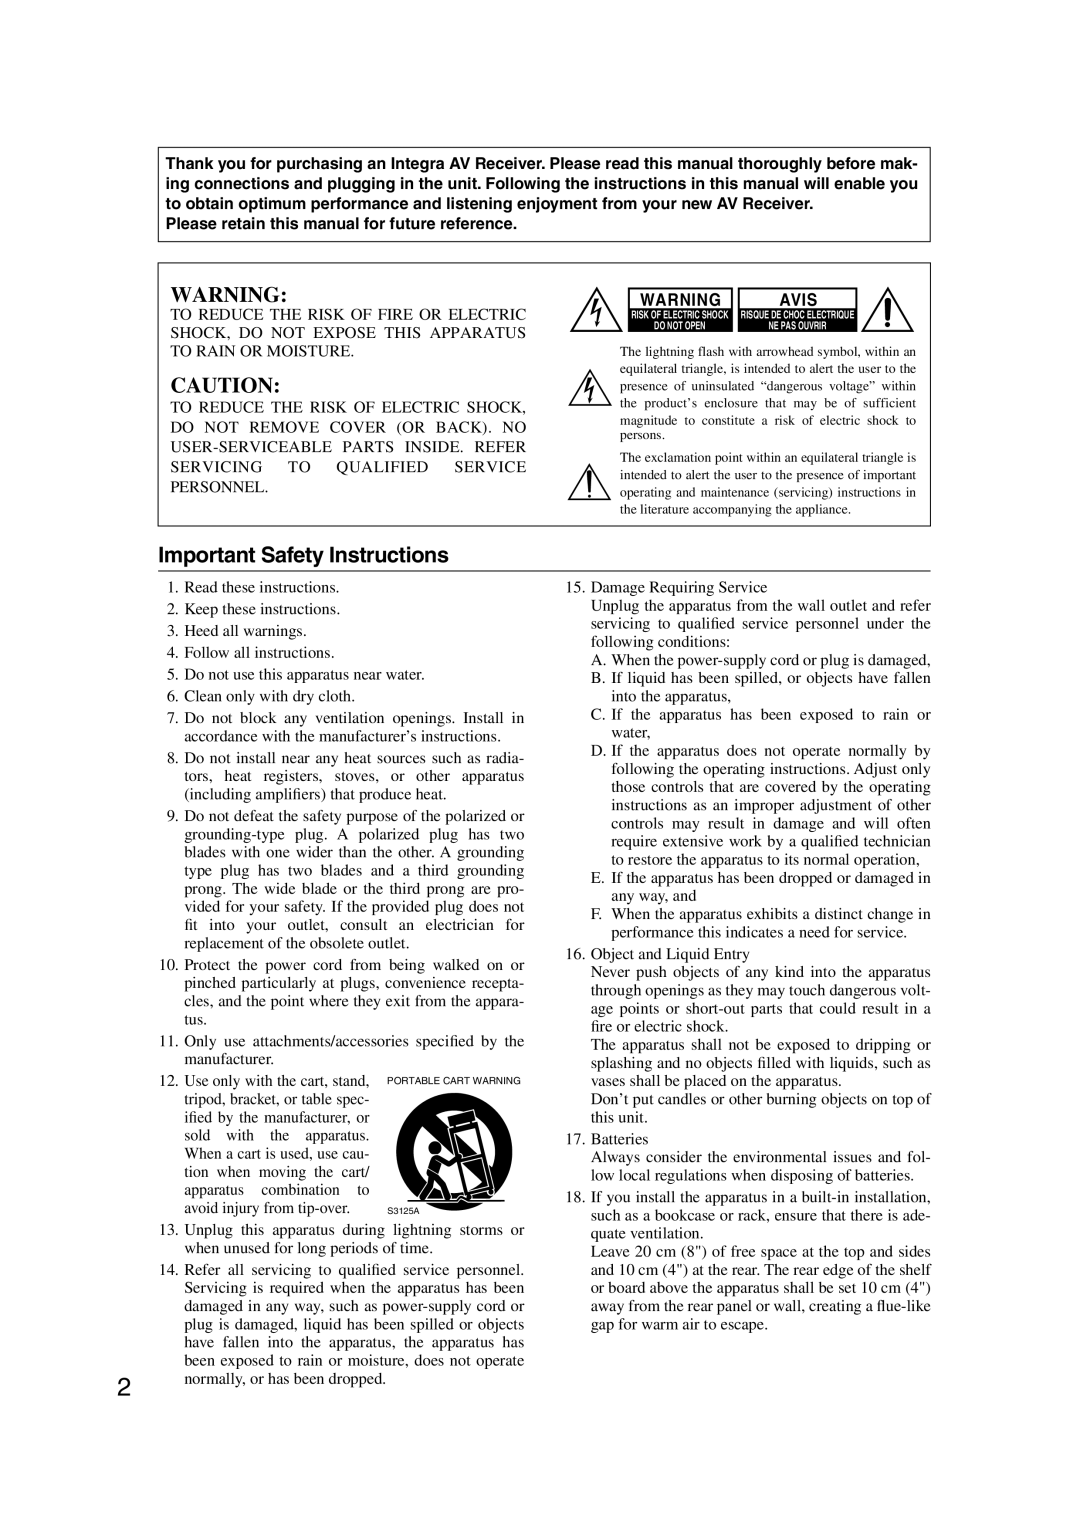 Integra DTR-5.9 instruction manual Important Safety Instructions, Avis 